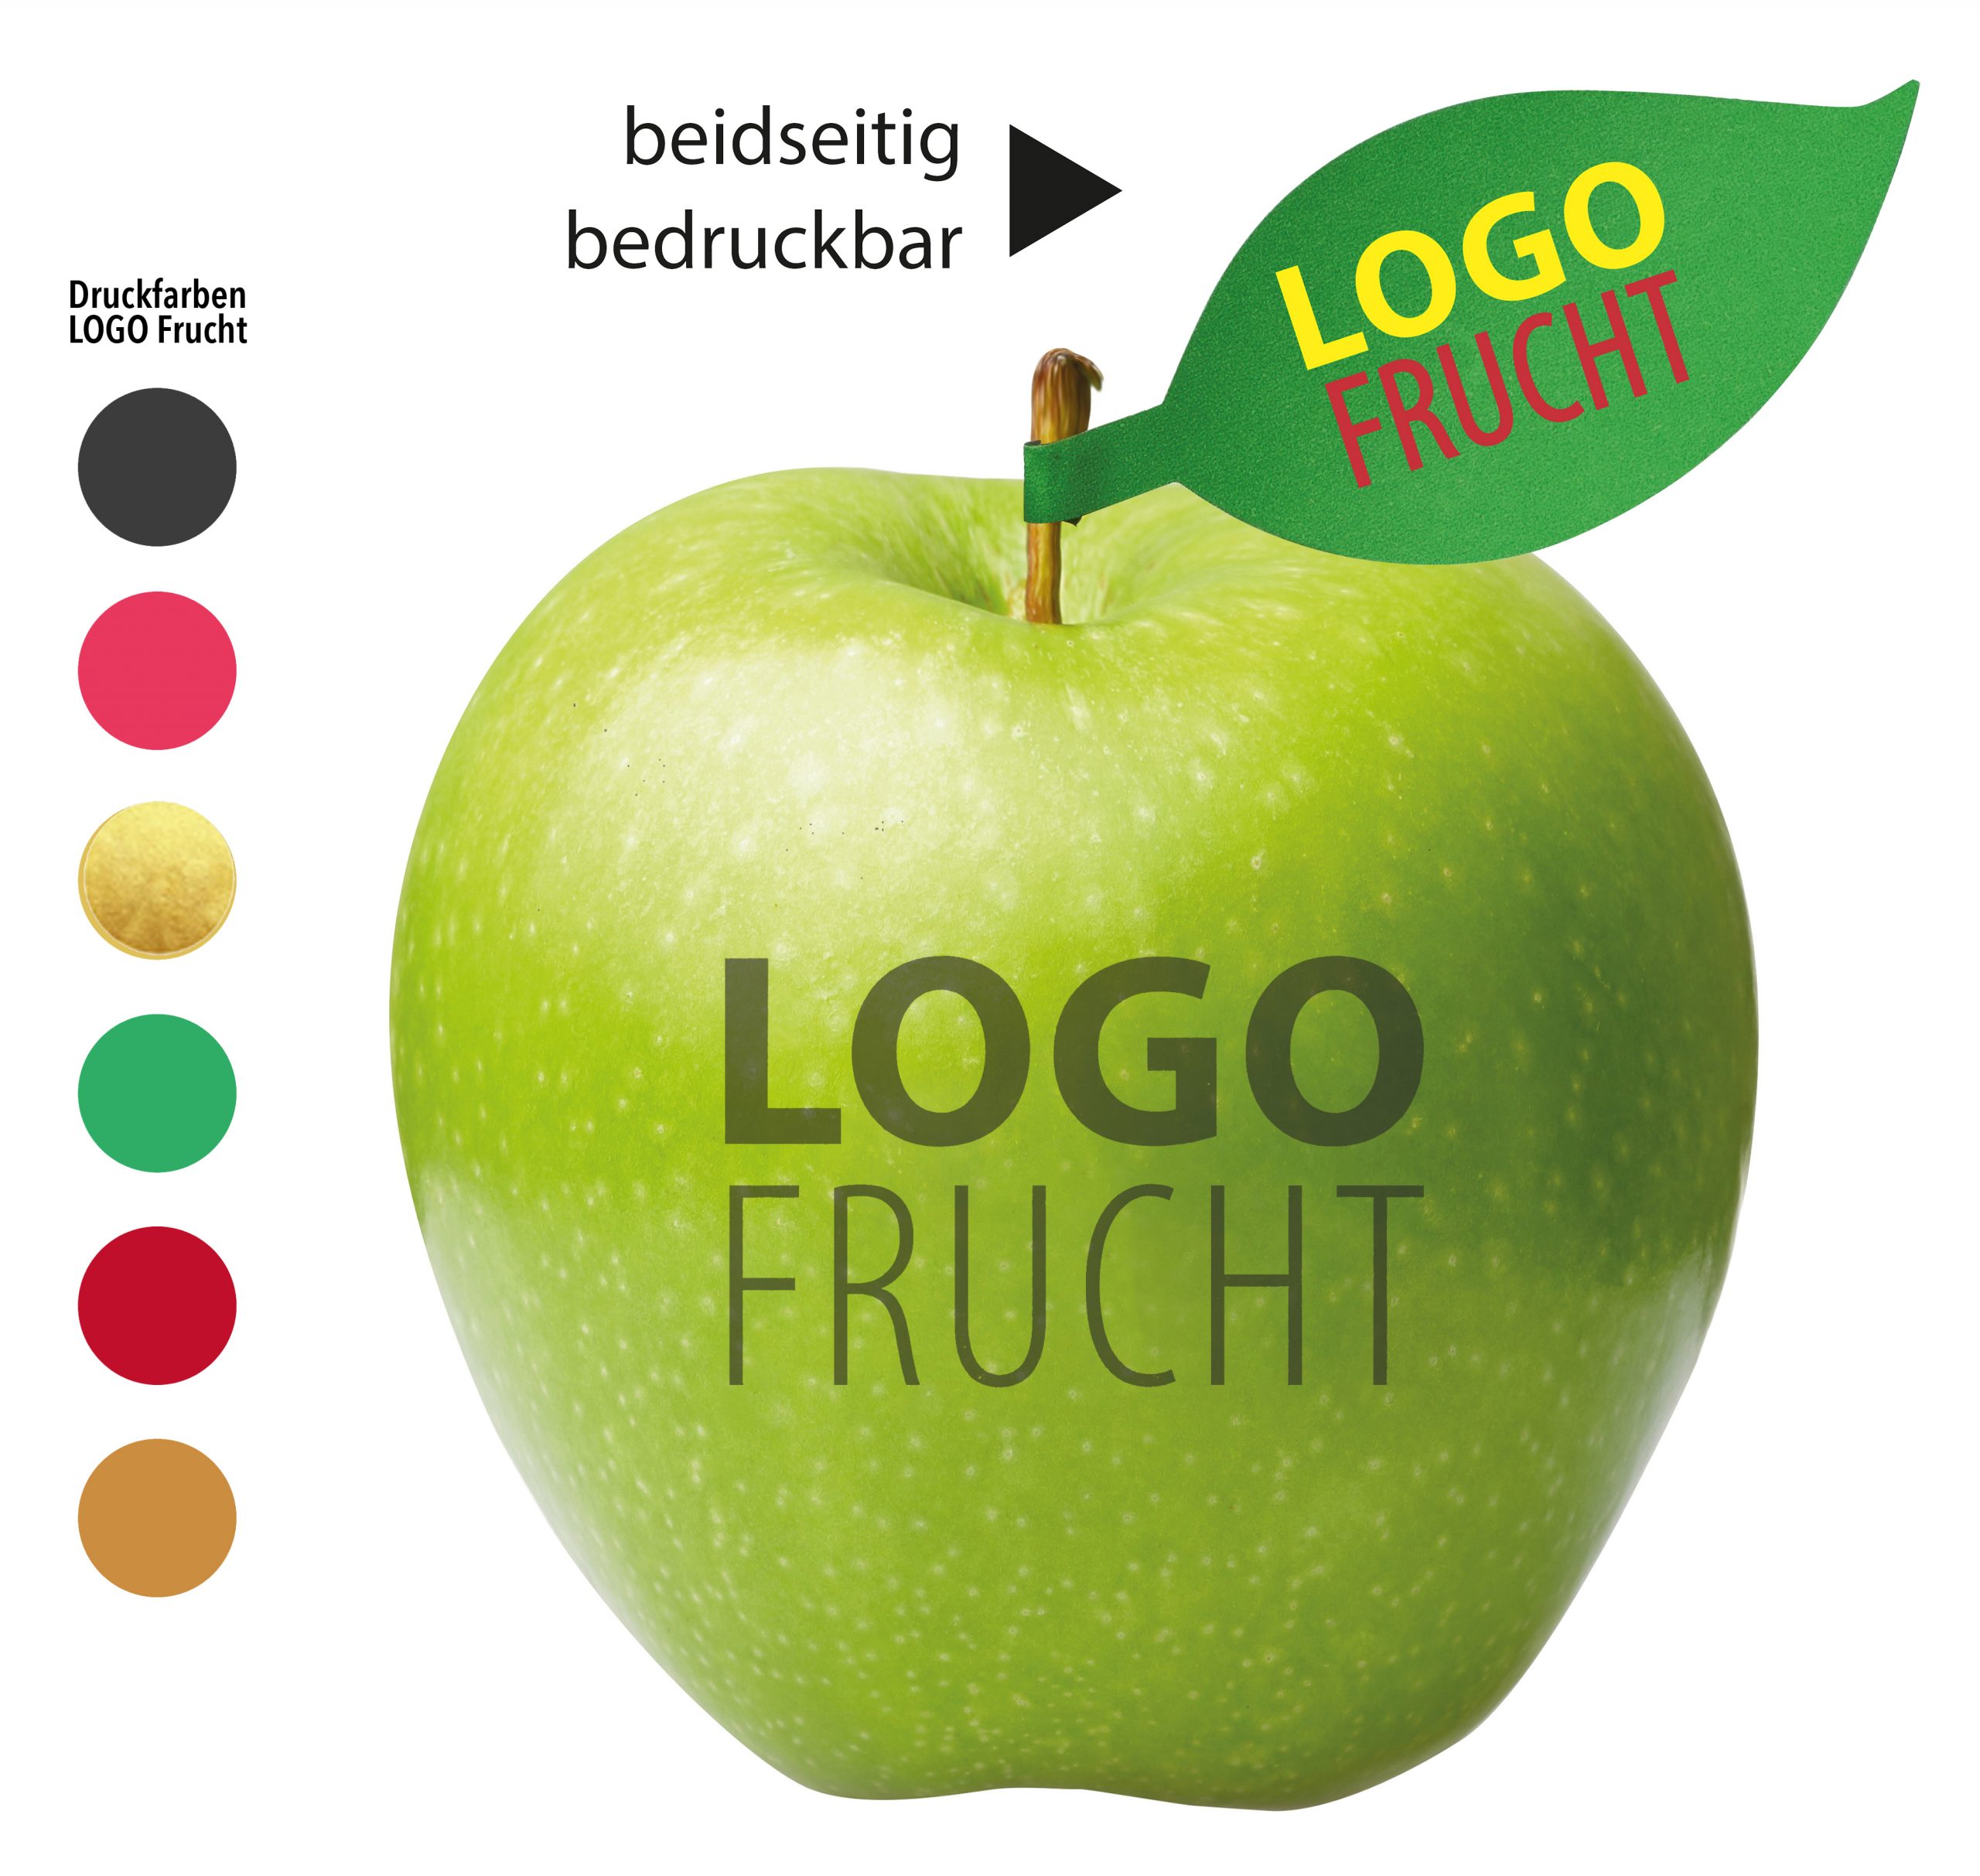 LogoFrucht Apfel grün + Apfelblatt